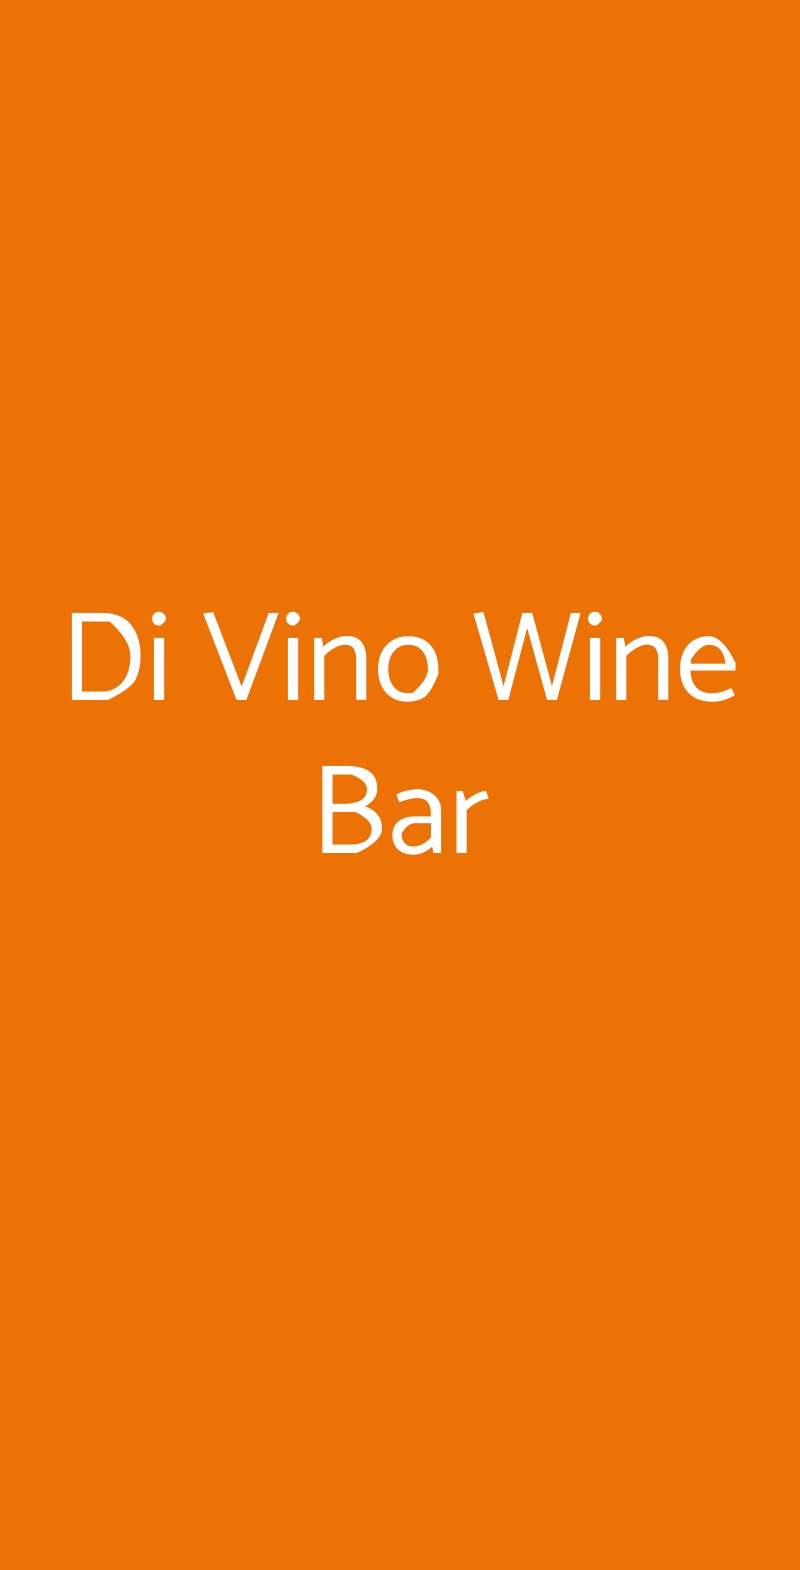 Di Vino Wine Bar Barano D'Ischia menù 1 pagina